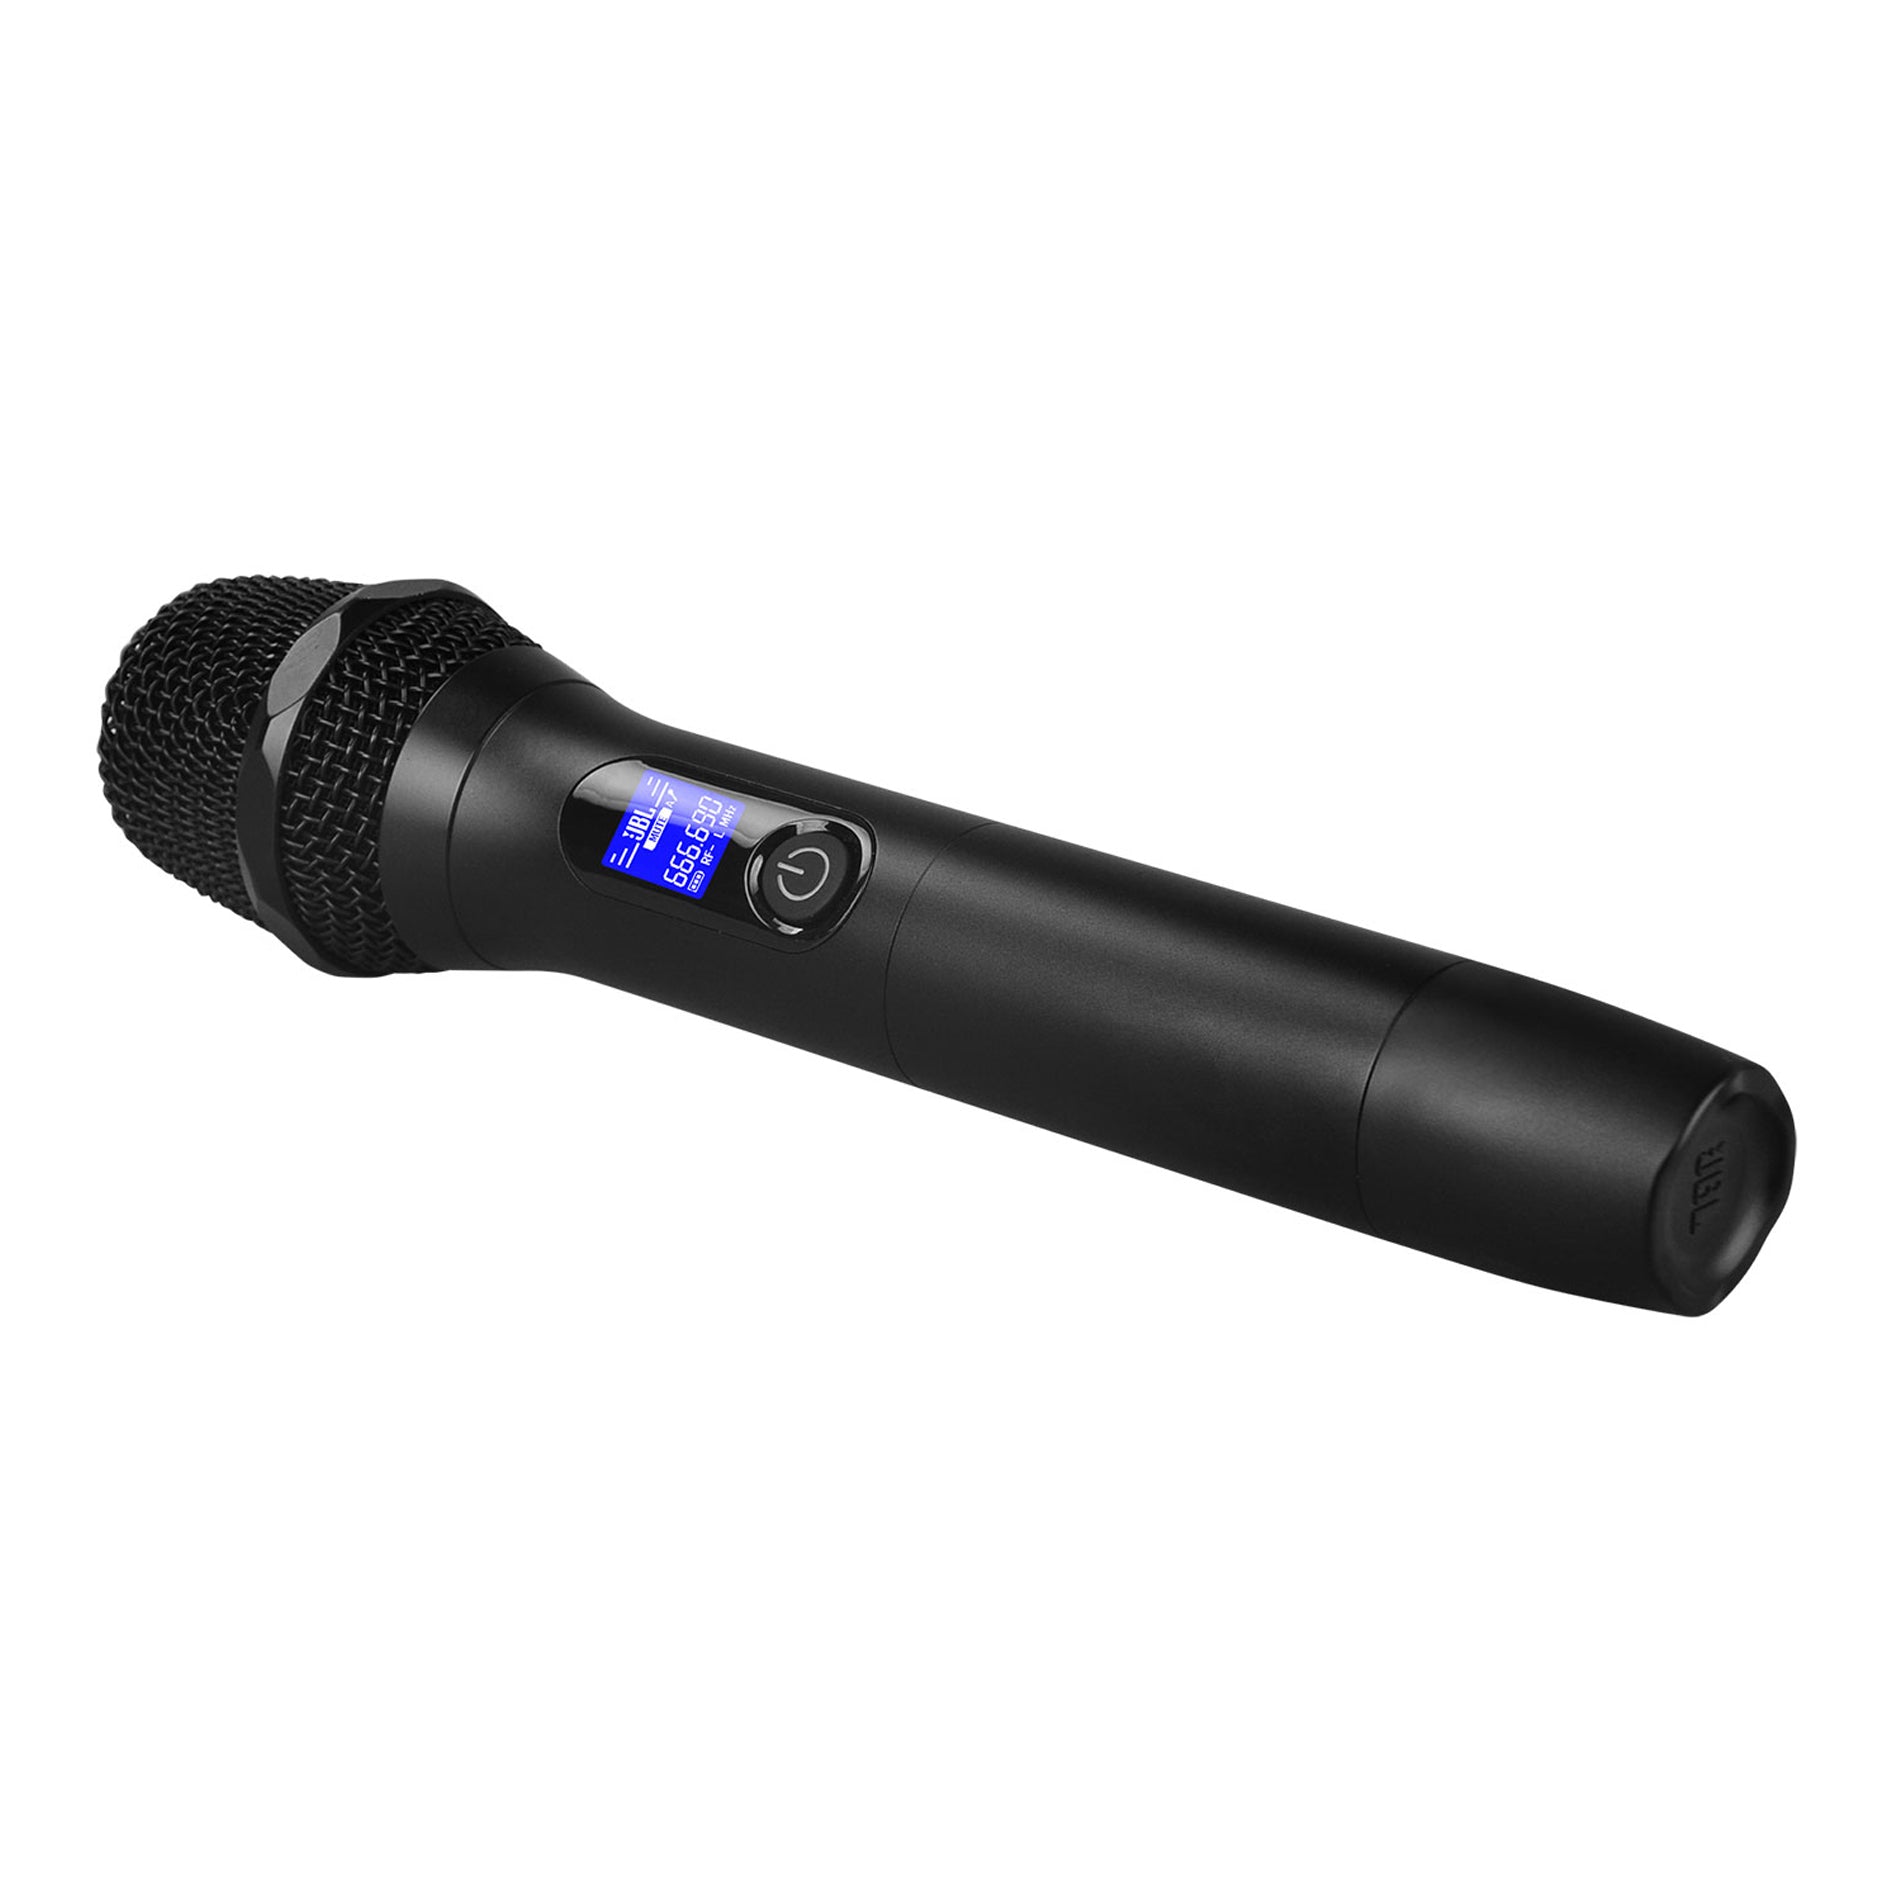 JBL VM300 Wireless Microphone System – EAST OCEAN AUDIO SDN BHD